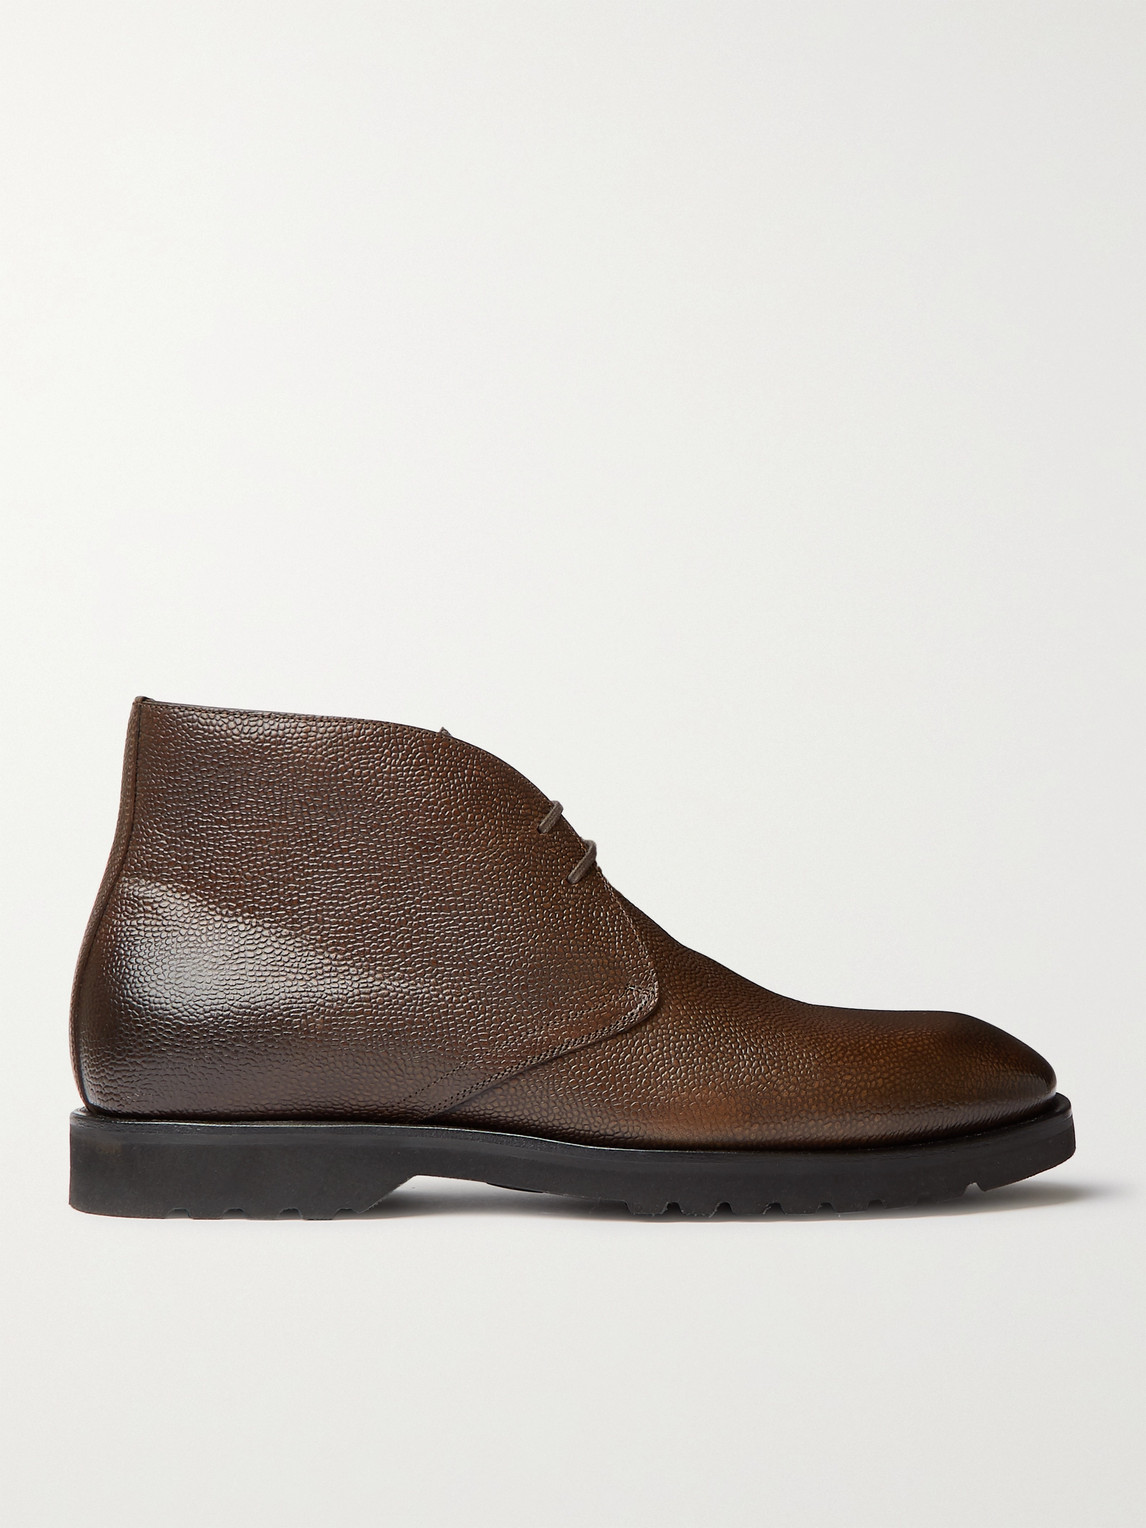 Tom Ford Kensington Pebble-grain Leather Desert Boots In Brown